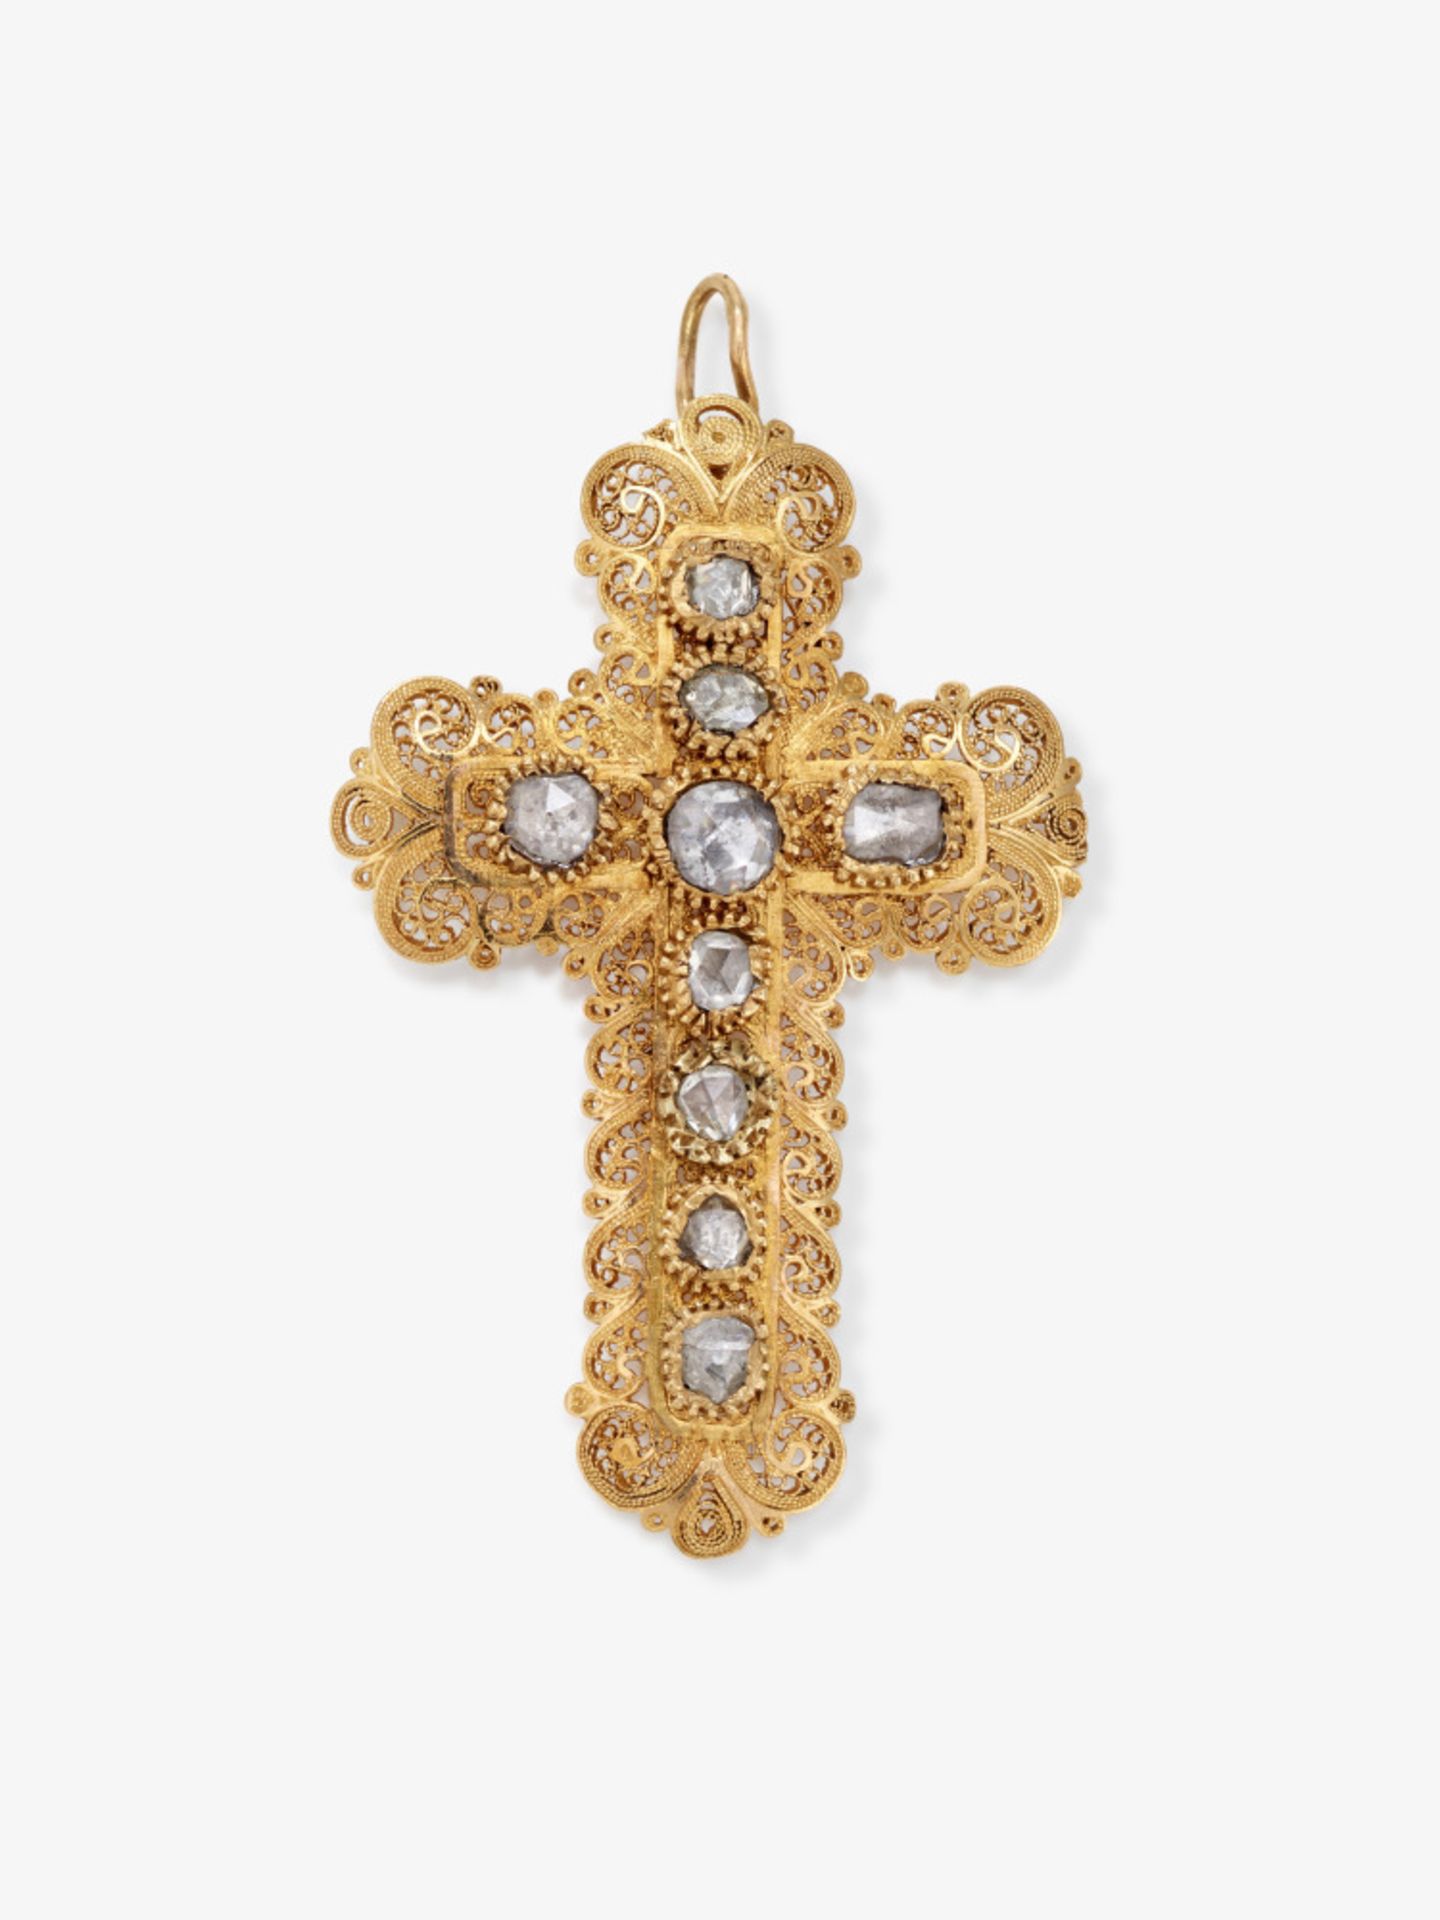 A rare cross pendant with diamonds - probably Austria, circa 1800-1820